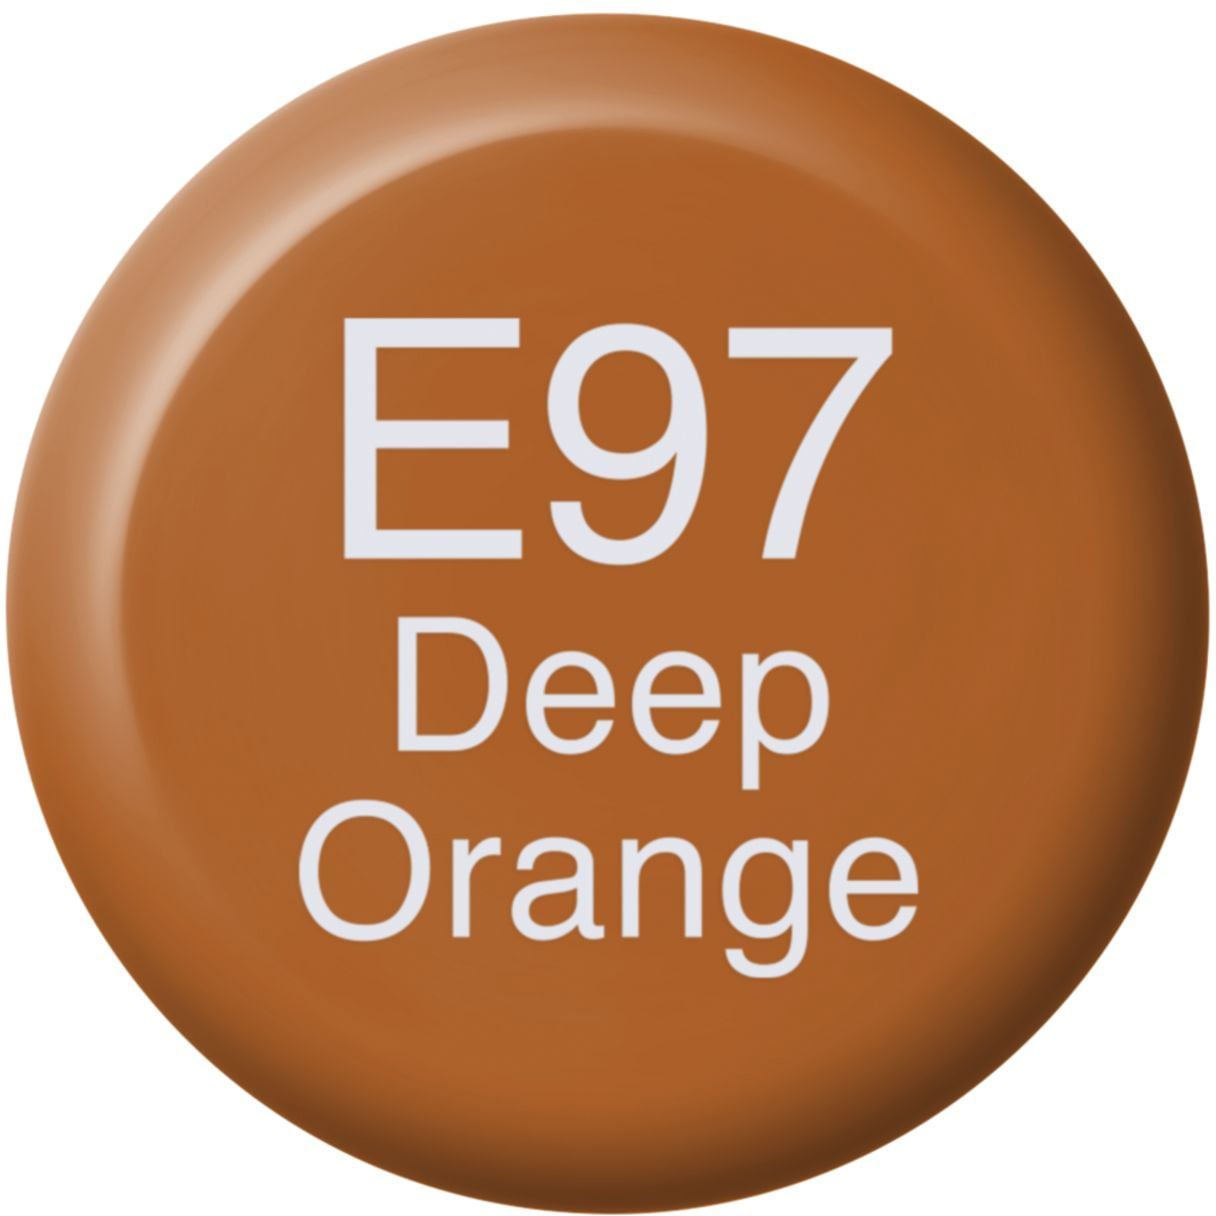 COPIC Ink Refill 21076333 E97 - Deep Orange E97 - Deep Orange